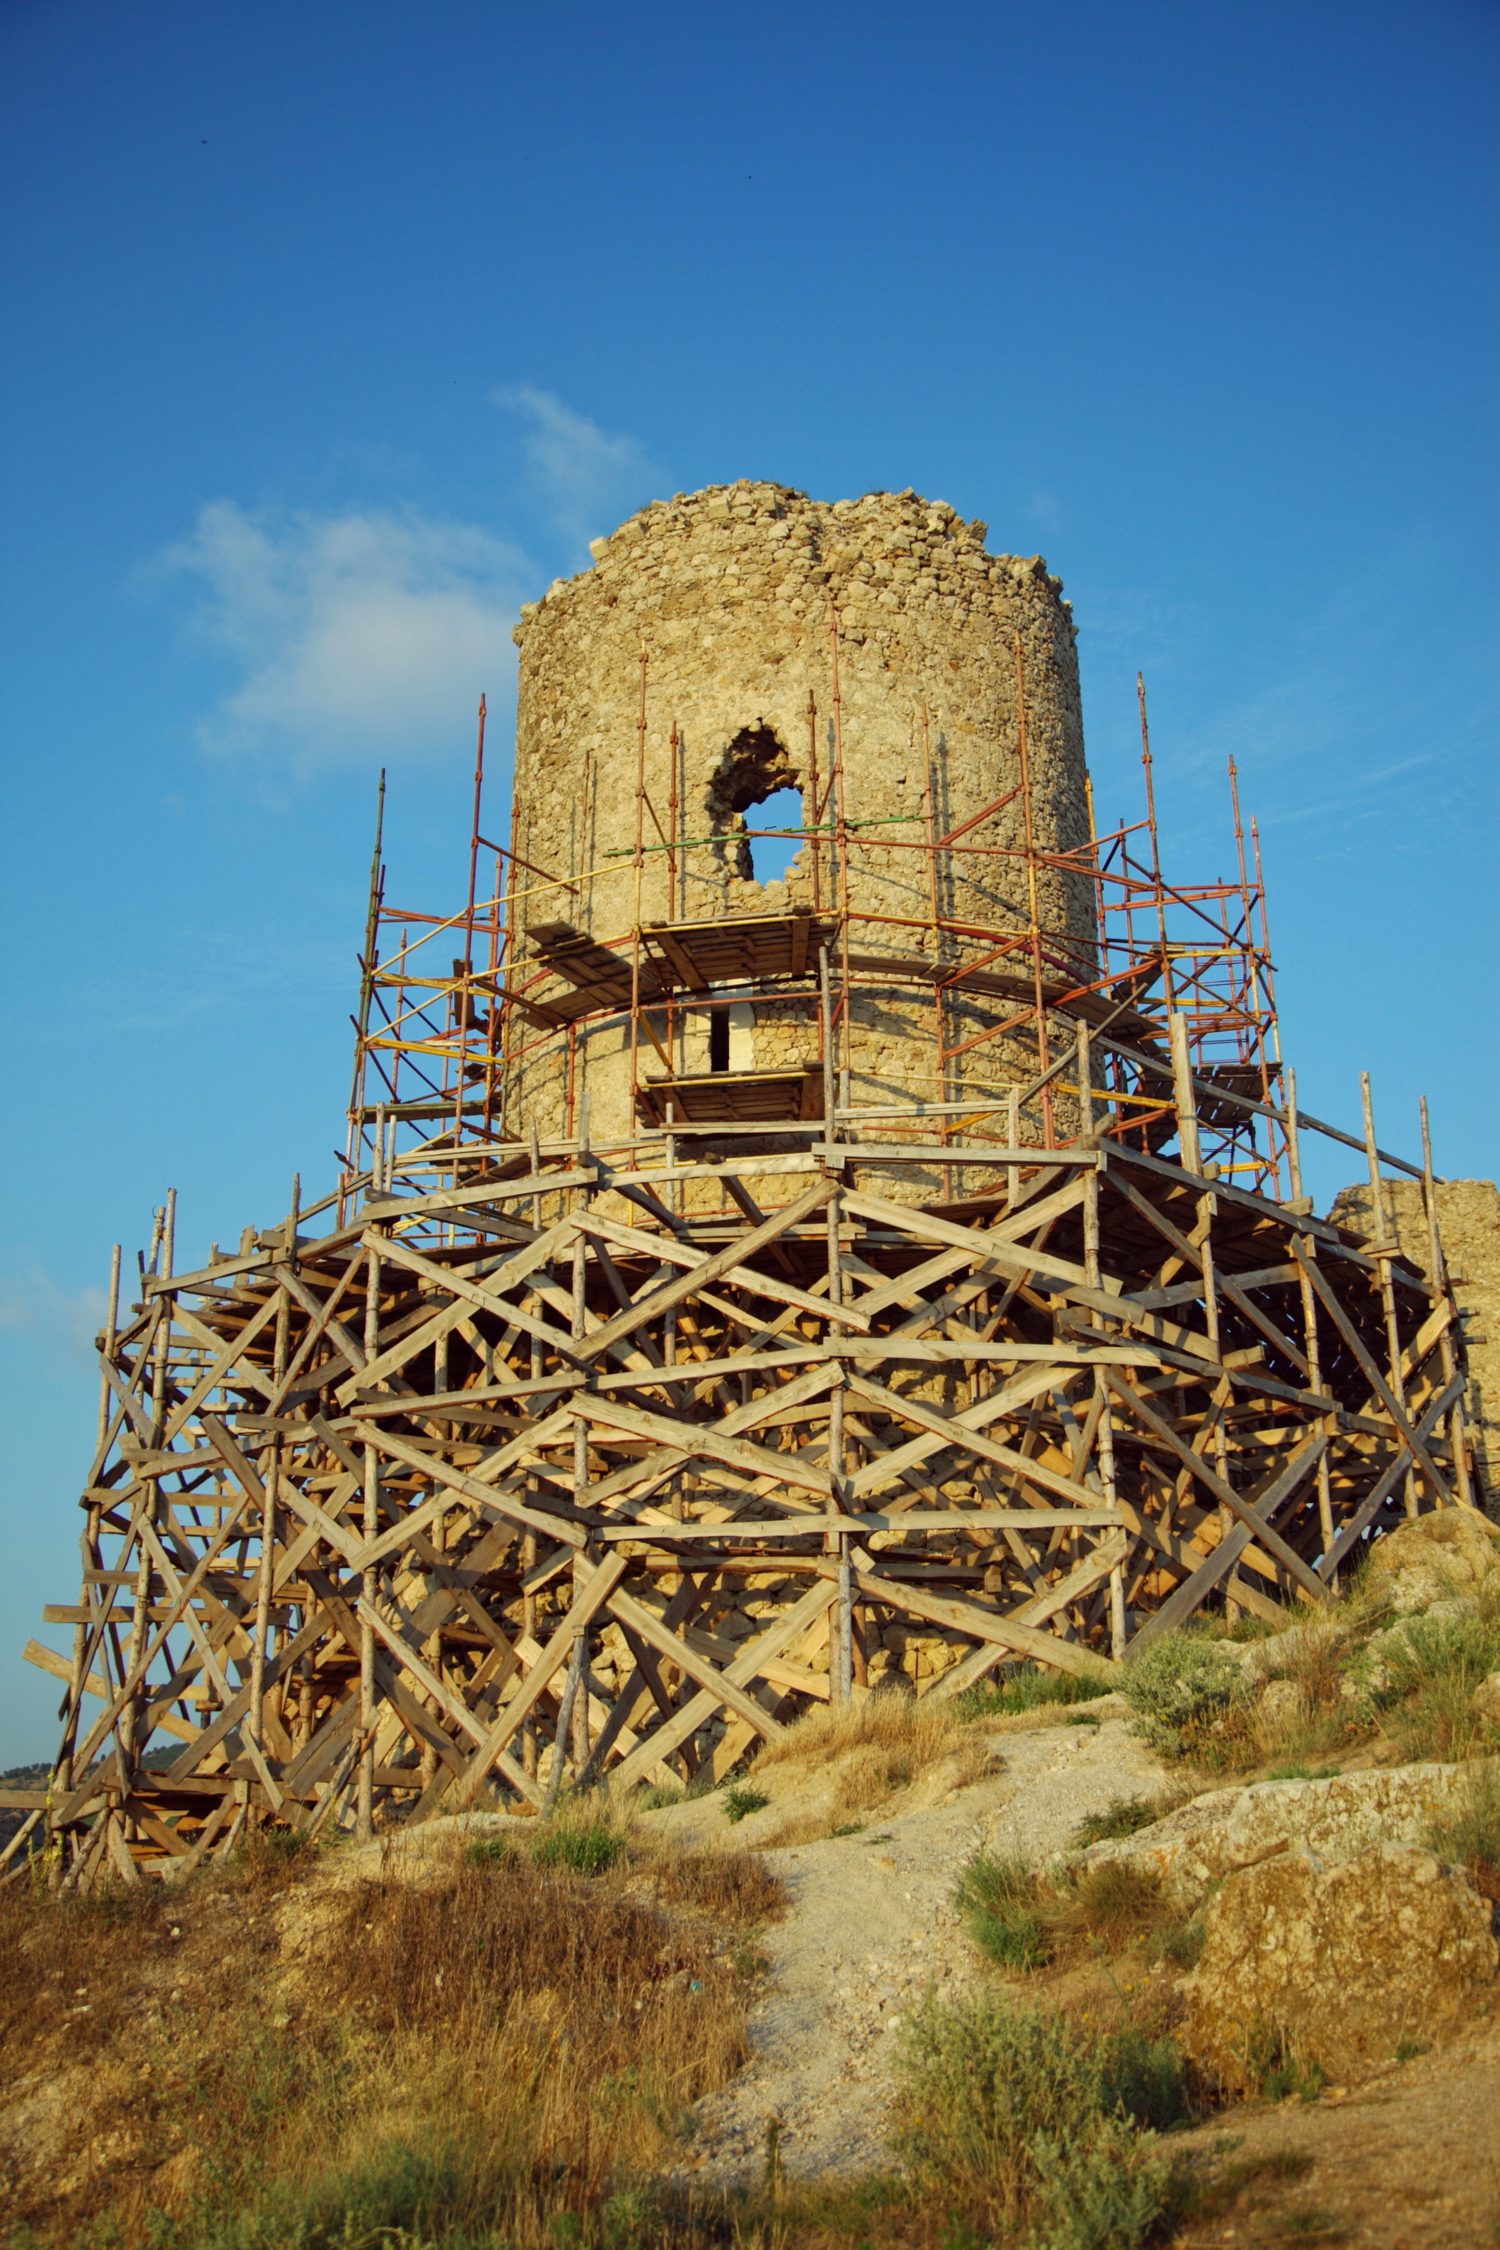 Старинный маяк Балаклавы